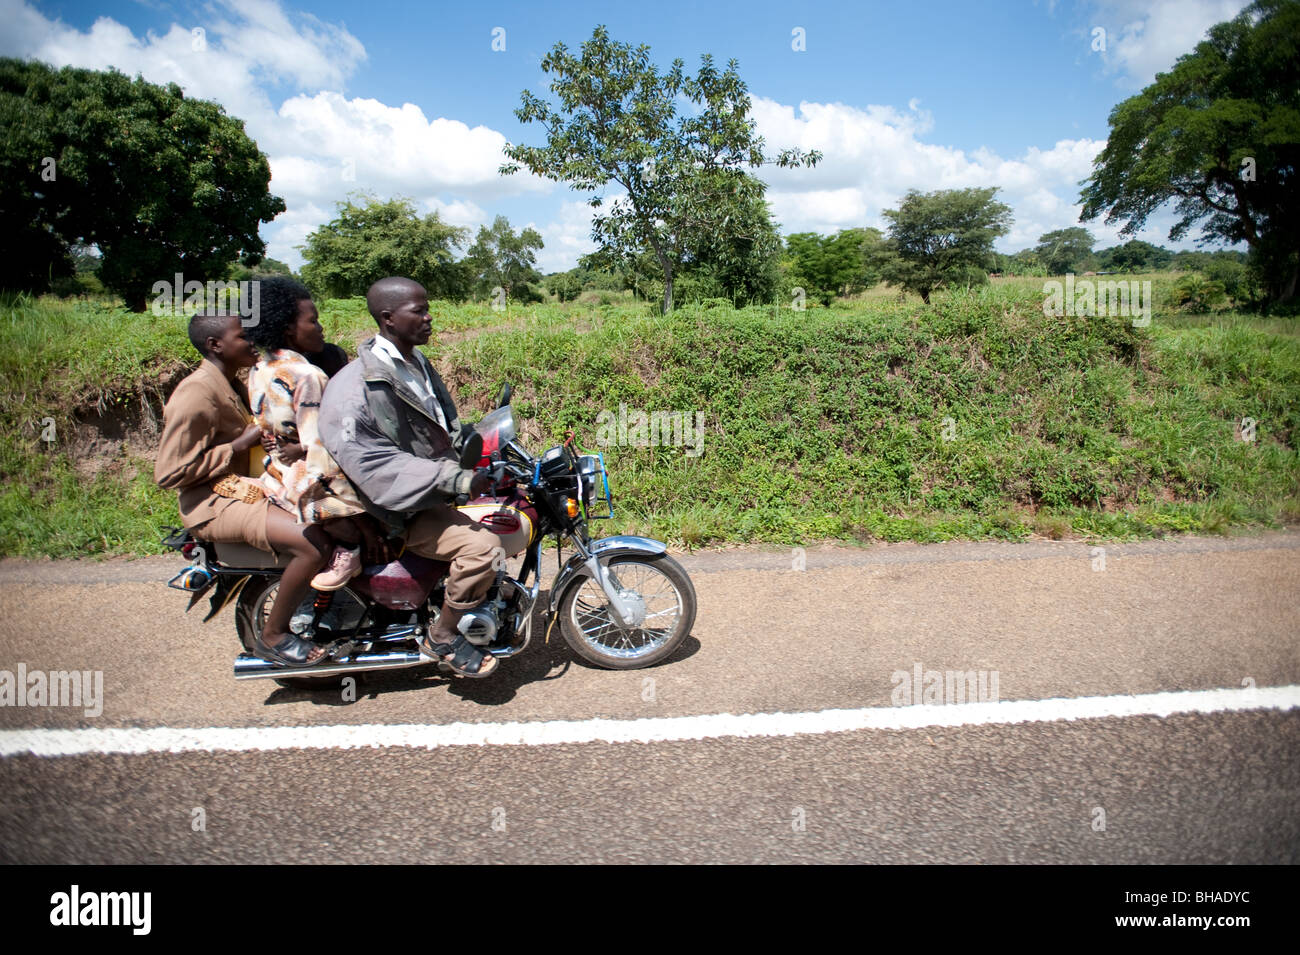 familia-africana-en-una-moto-bhadyc.jpg